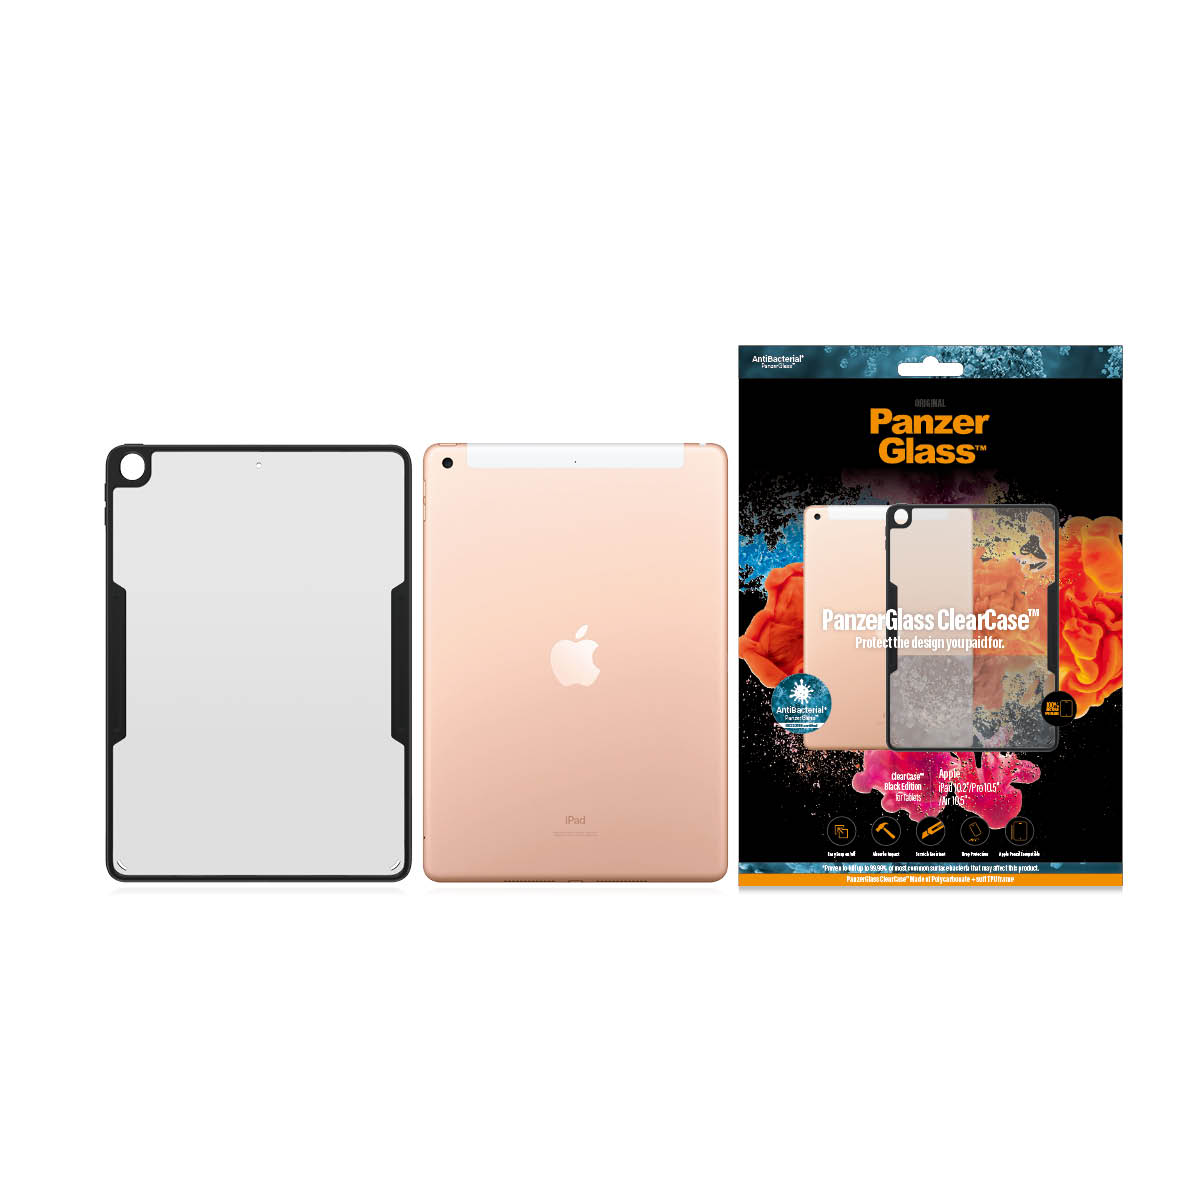 PanzerGlasstm ClearCasetm Apple iPad 10.2″ | Pro | Aer 10.5″ thumb